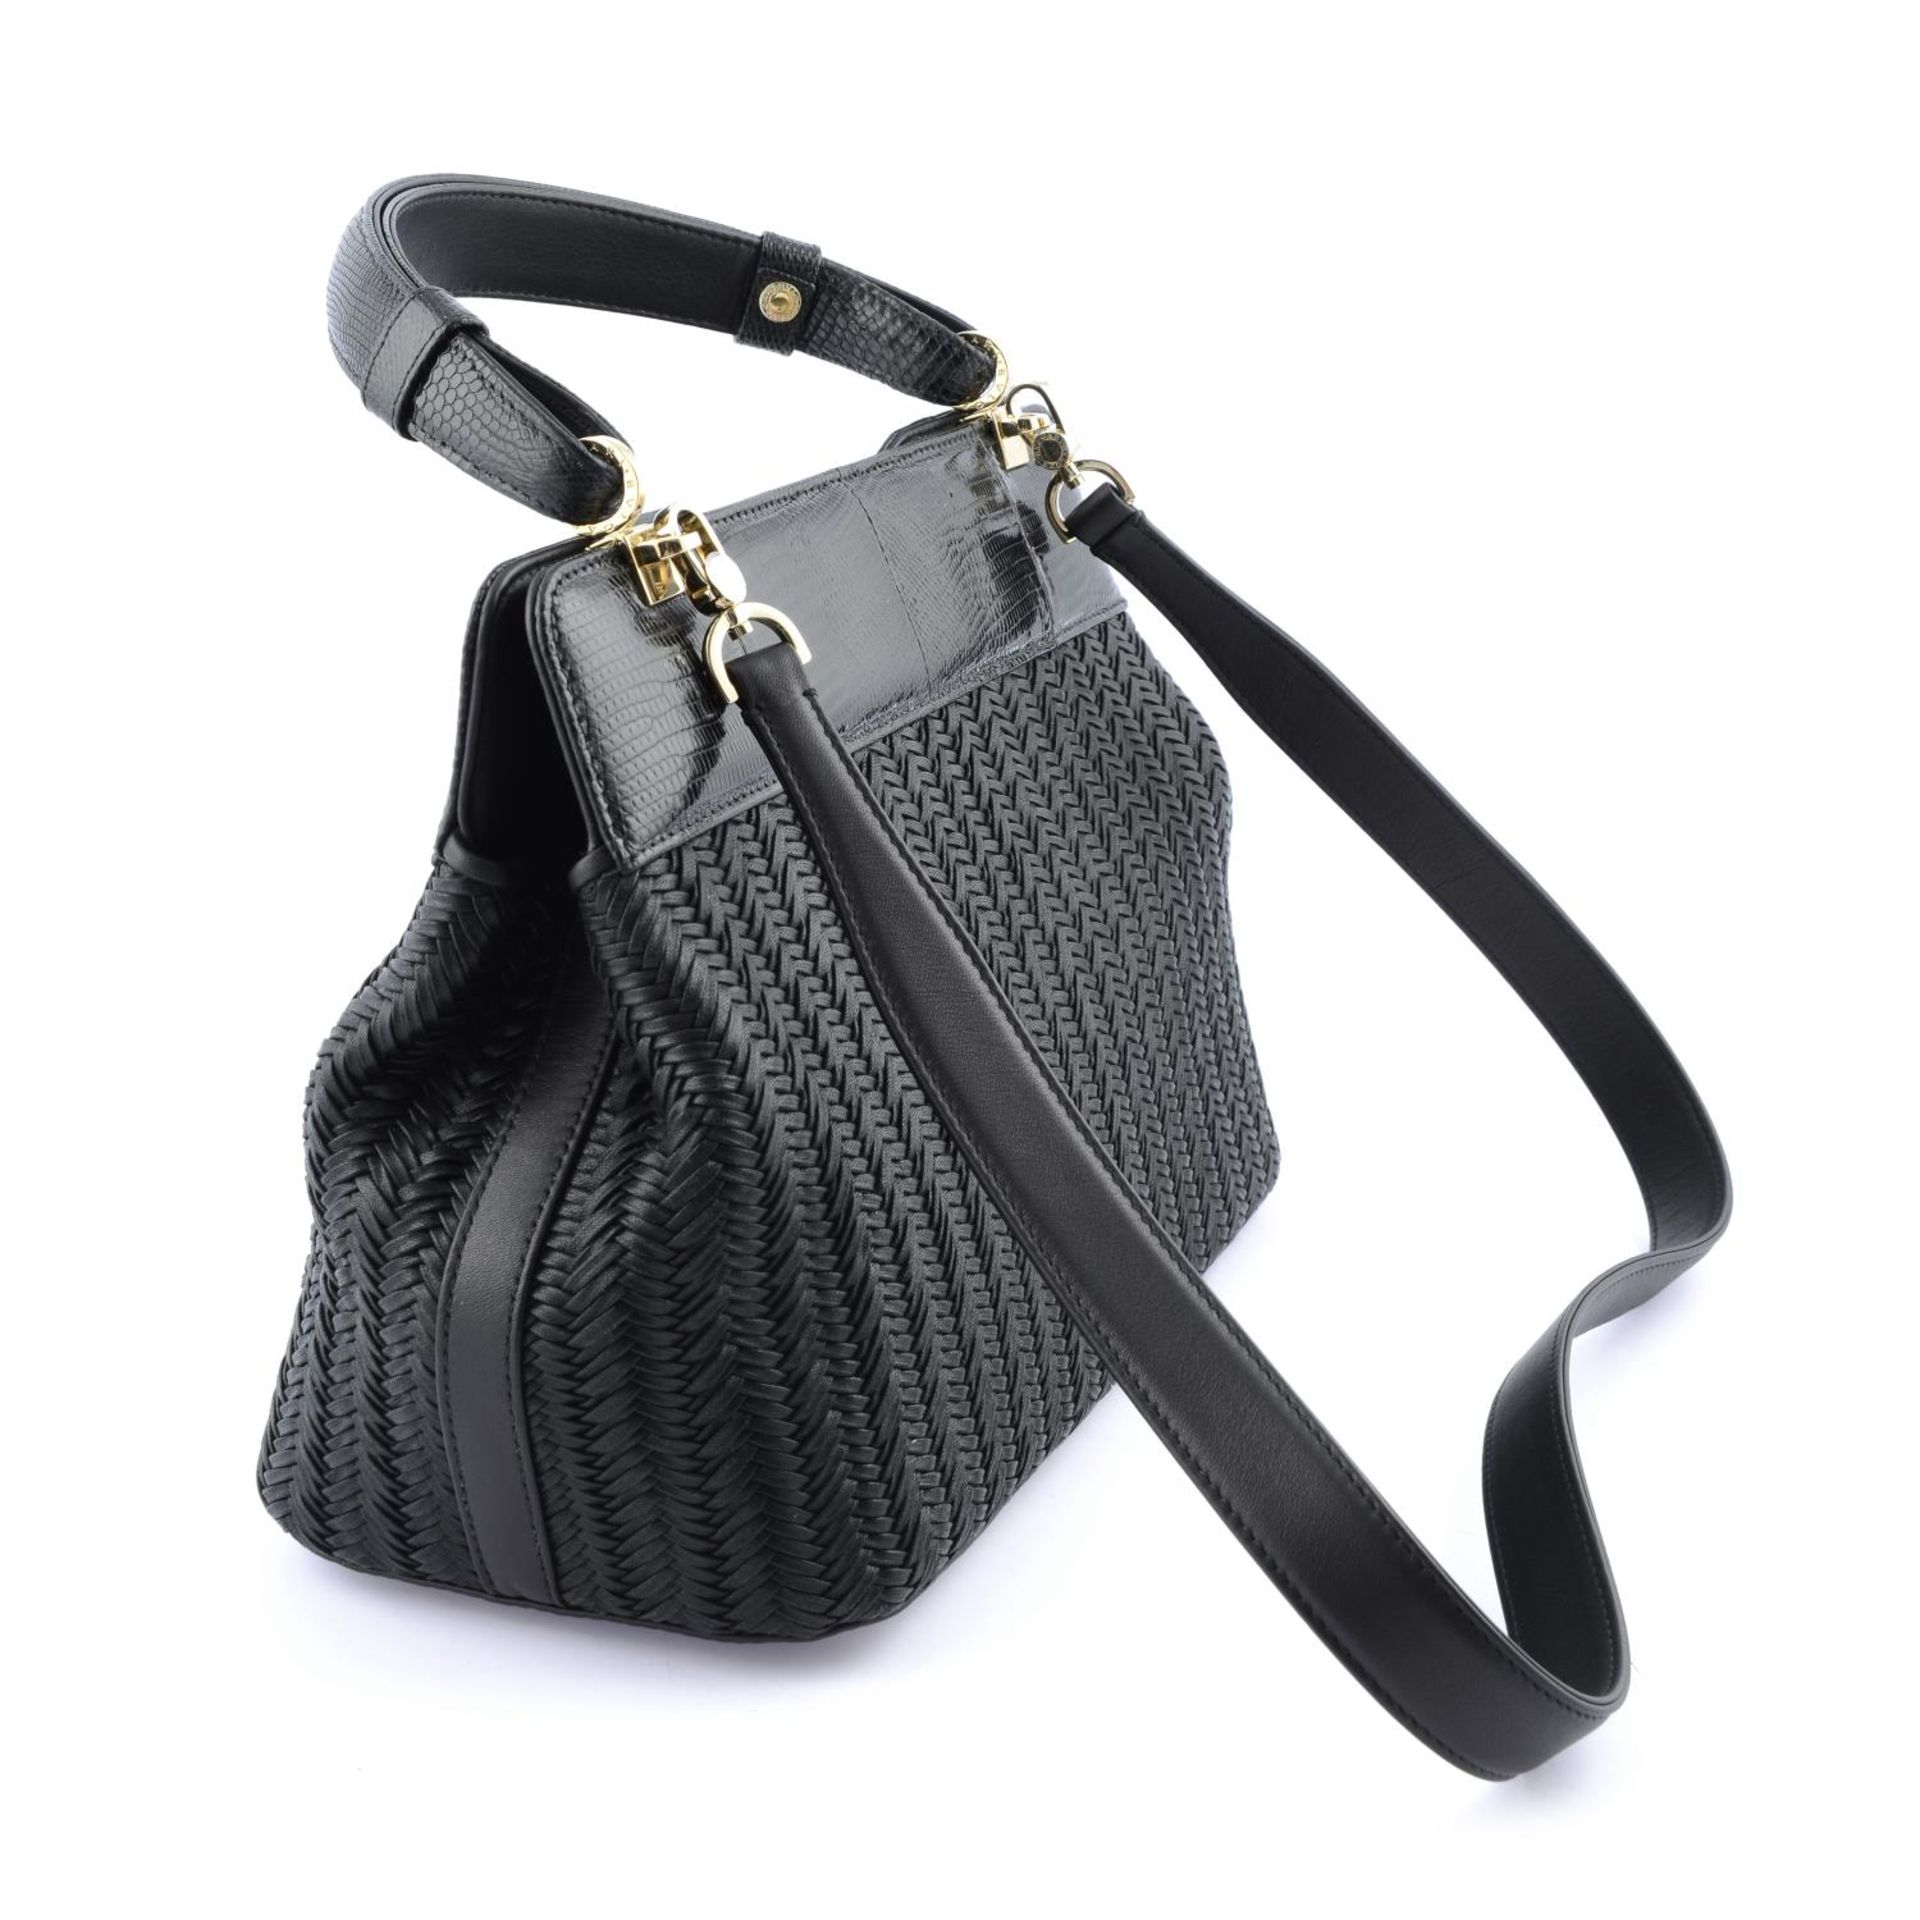 BULGARI - a woven leather Isabella Rossellini handbag. - Image 3 of 5